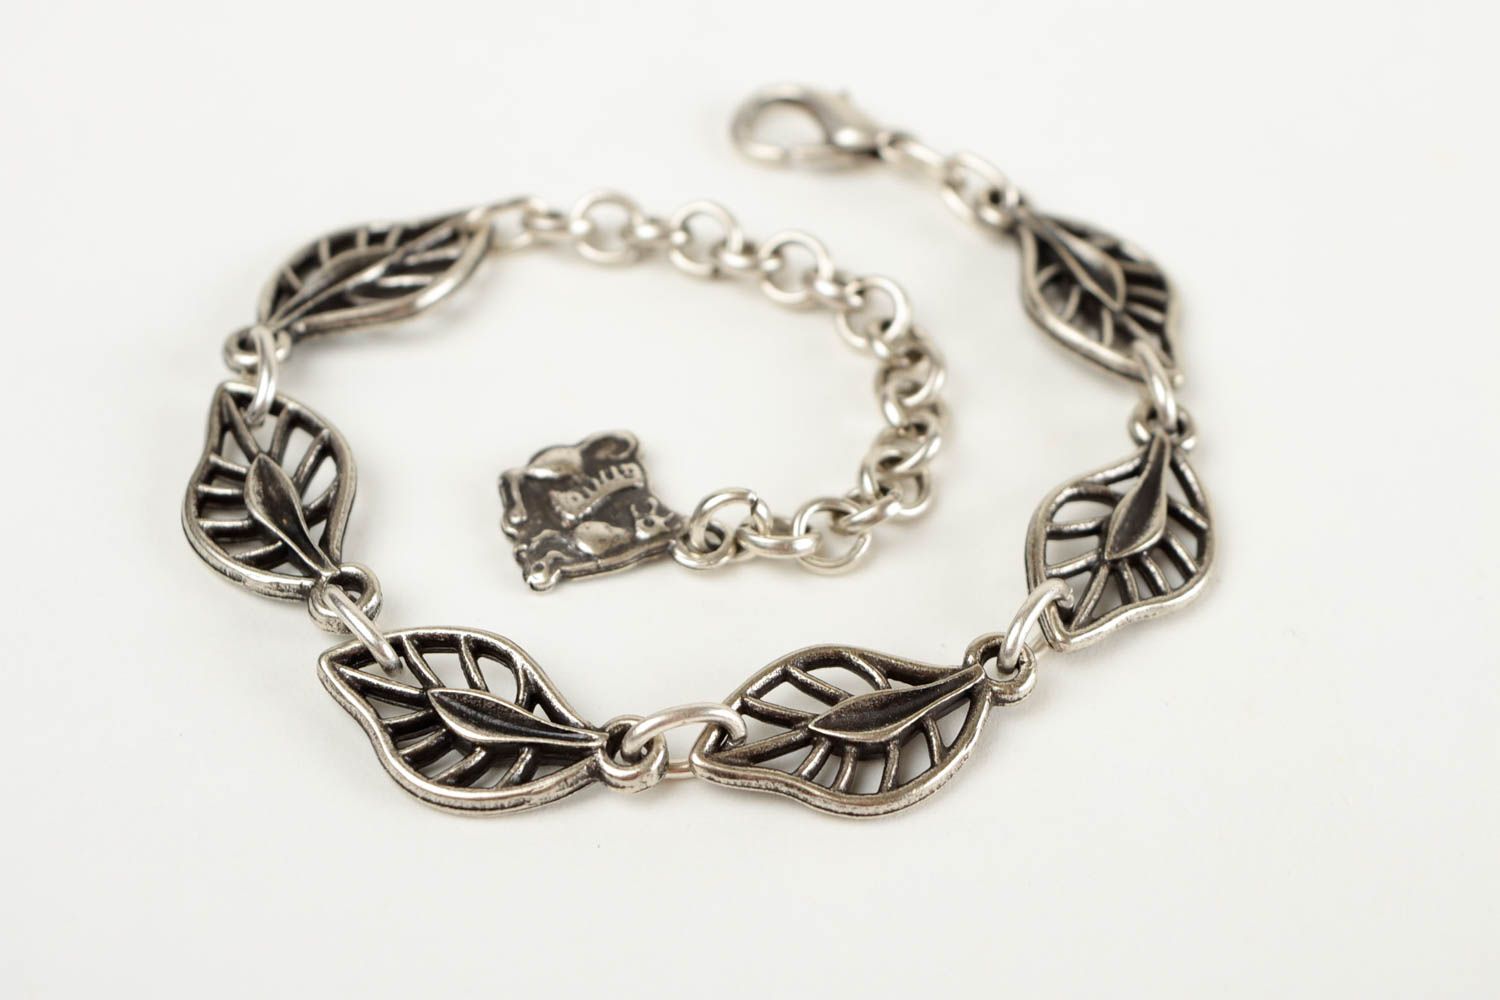 Unusual handmade metal bracelet metal jewelry designs stylish gifts for her photo 4